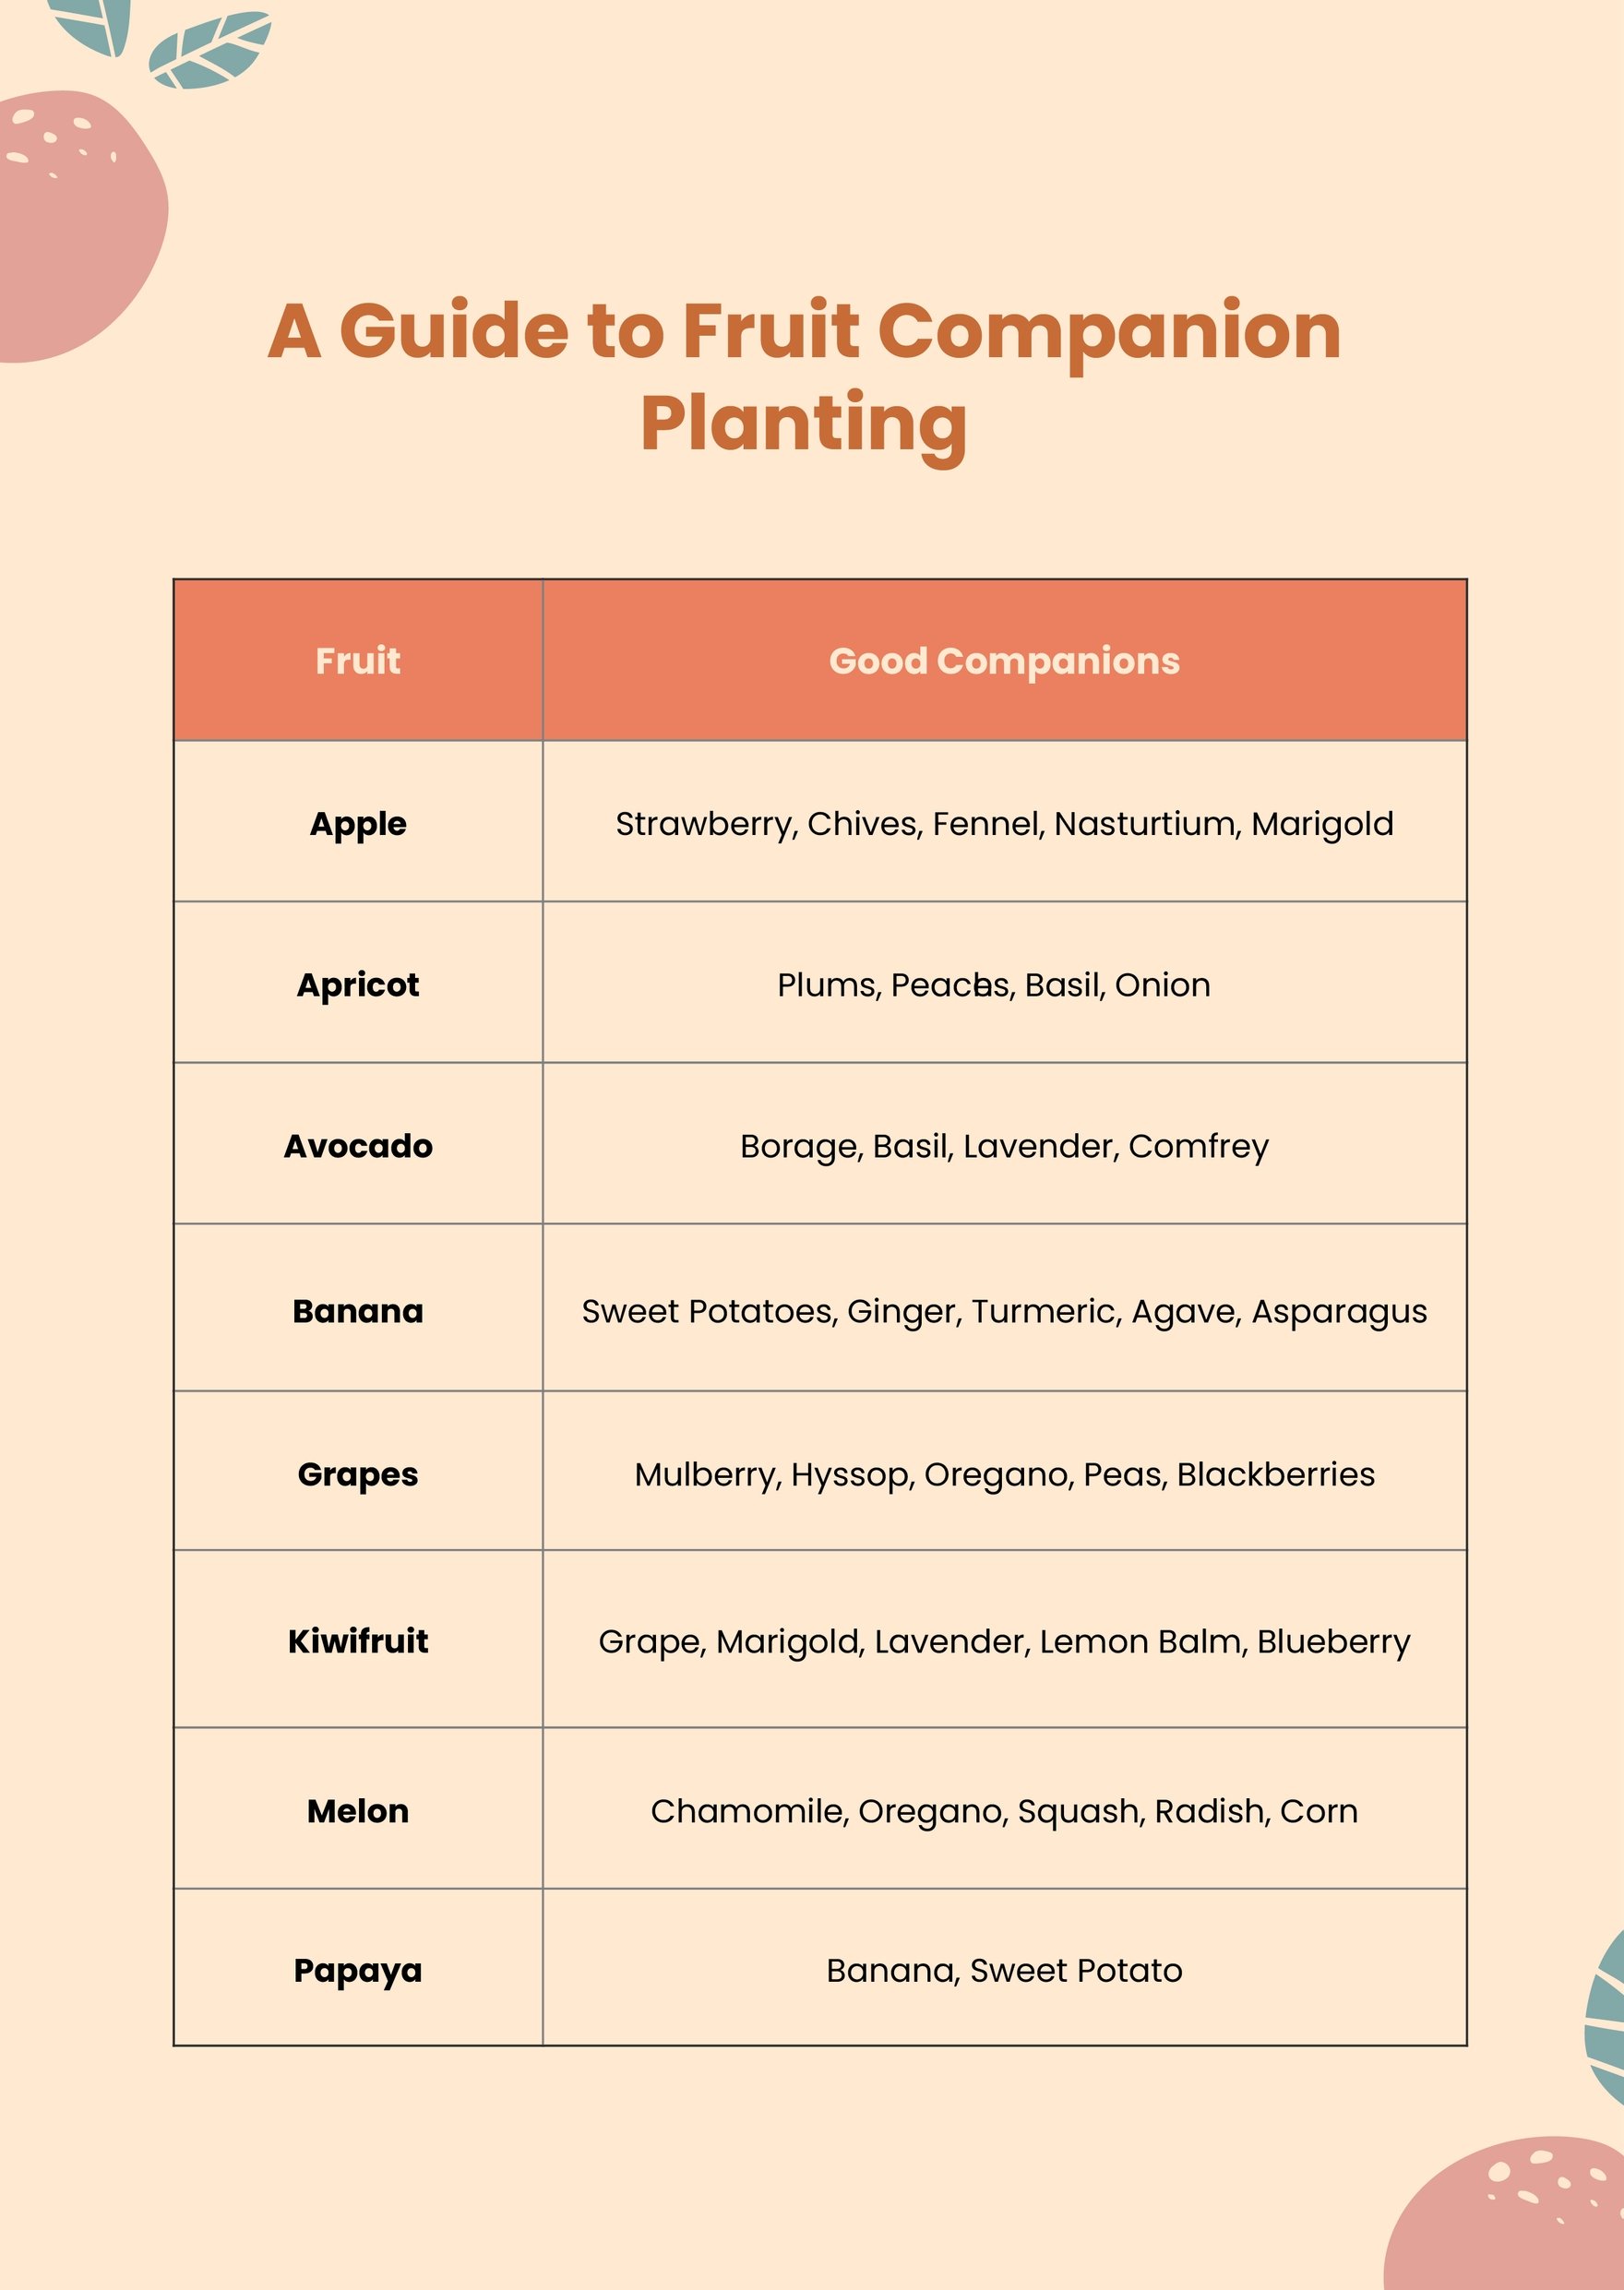 Companion Planting Chart For Fruit in PDF, Illustrator